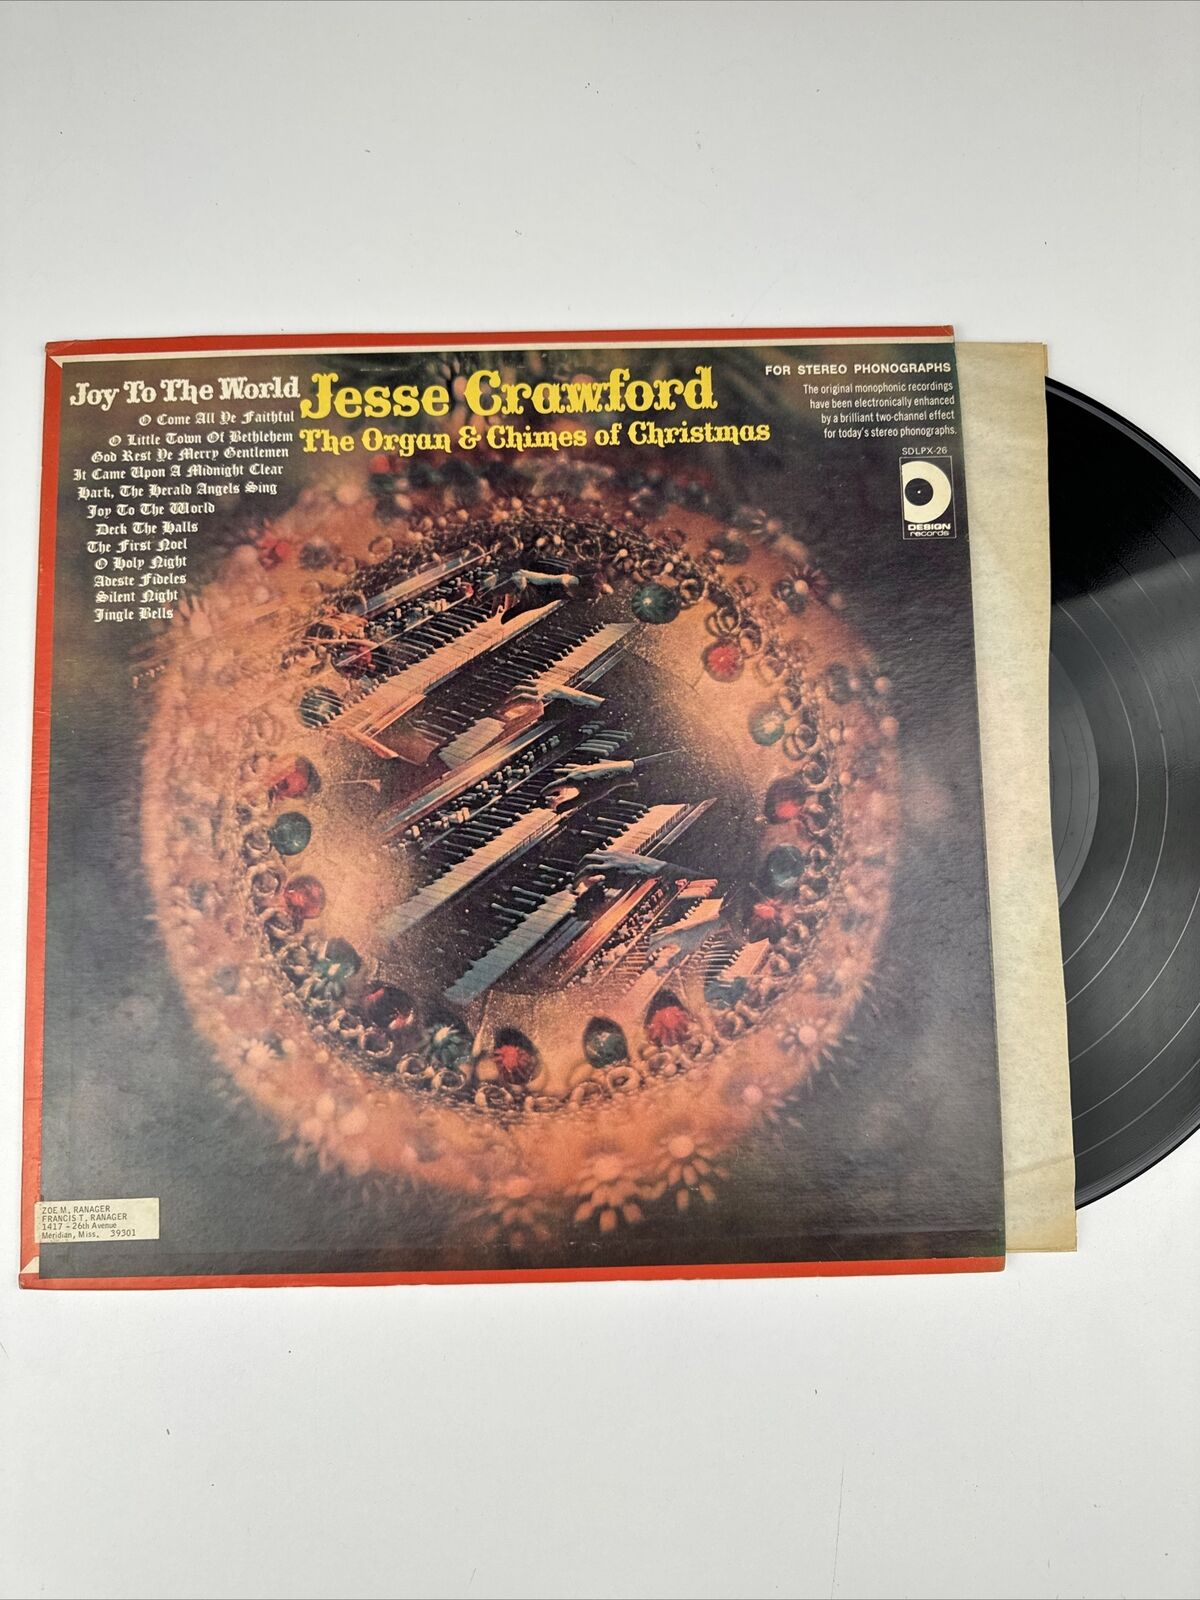 Jesse Crawford - The Organ & Chimes of Christmas LP Vinyl Record SDLPX-26